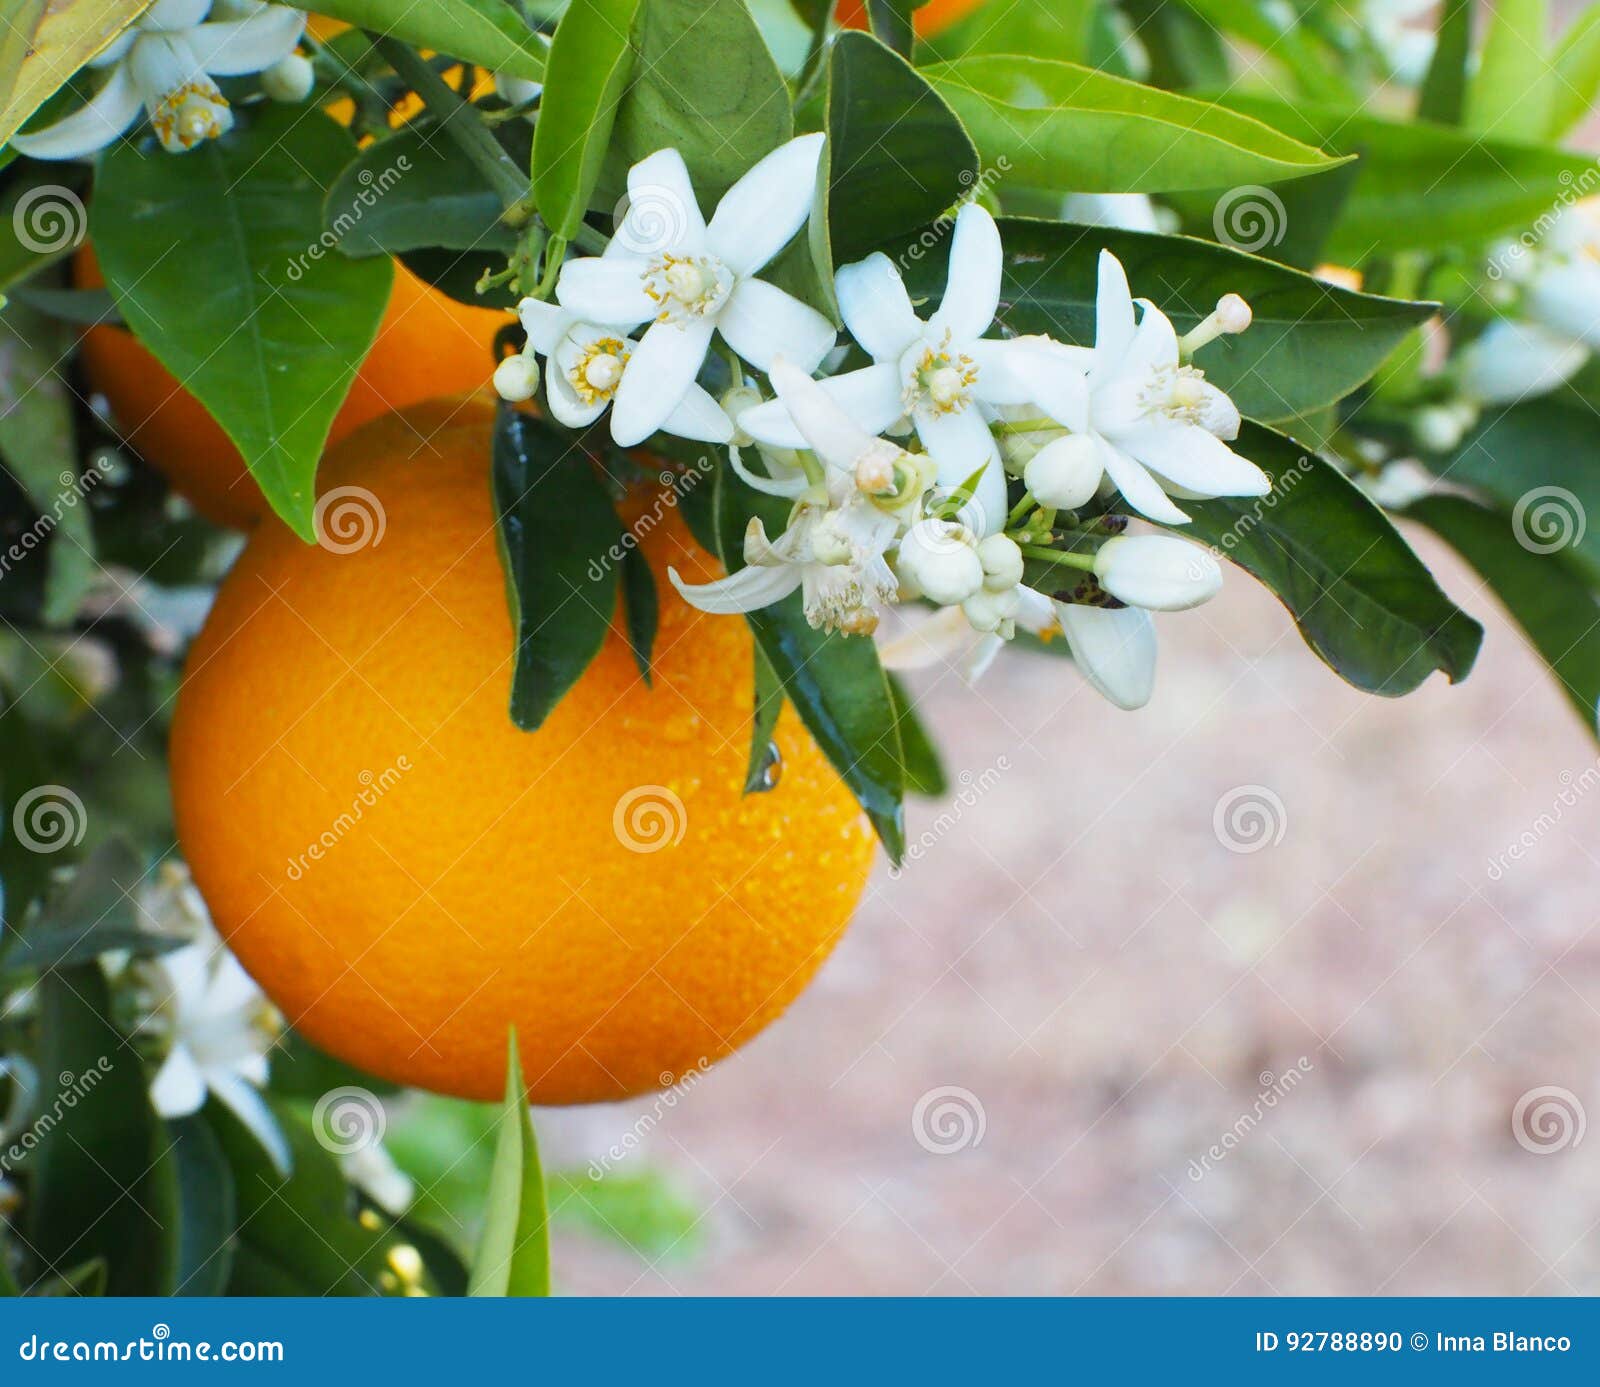 valencian orange and orange blossoms. spring